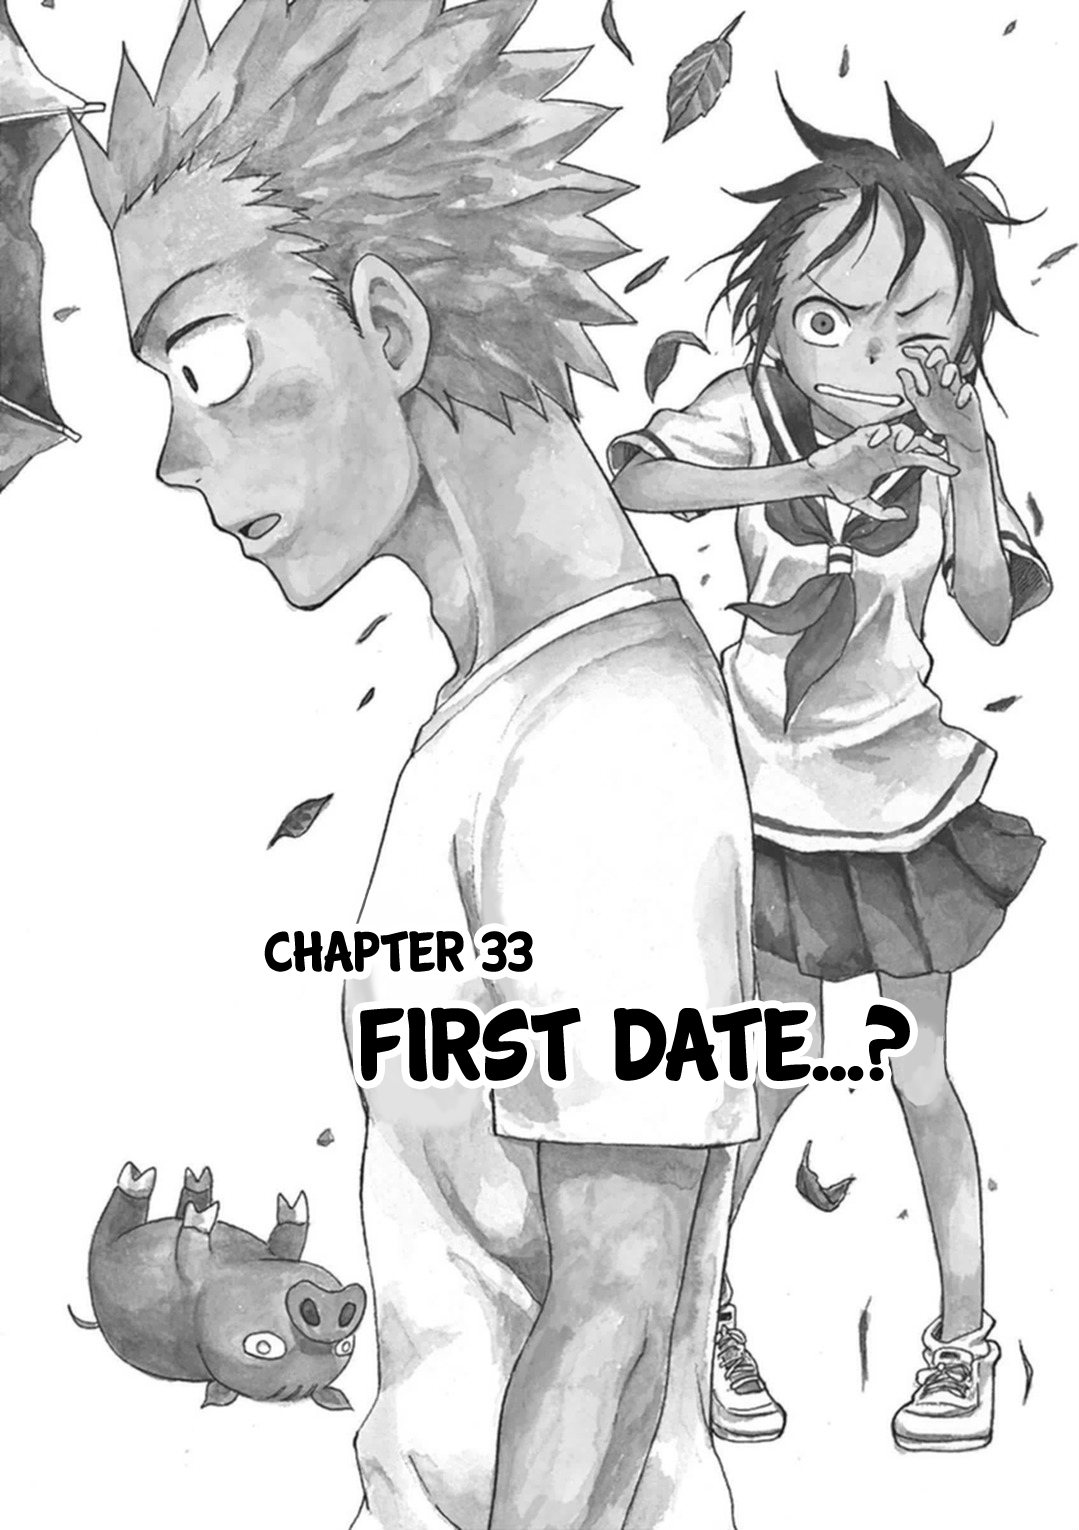 Fudatsuki no Kyoko chan Vol. 7 Ch. 33 First Date...?